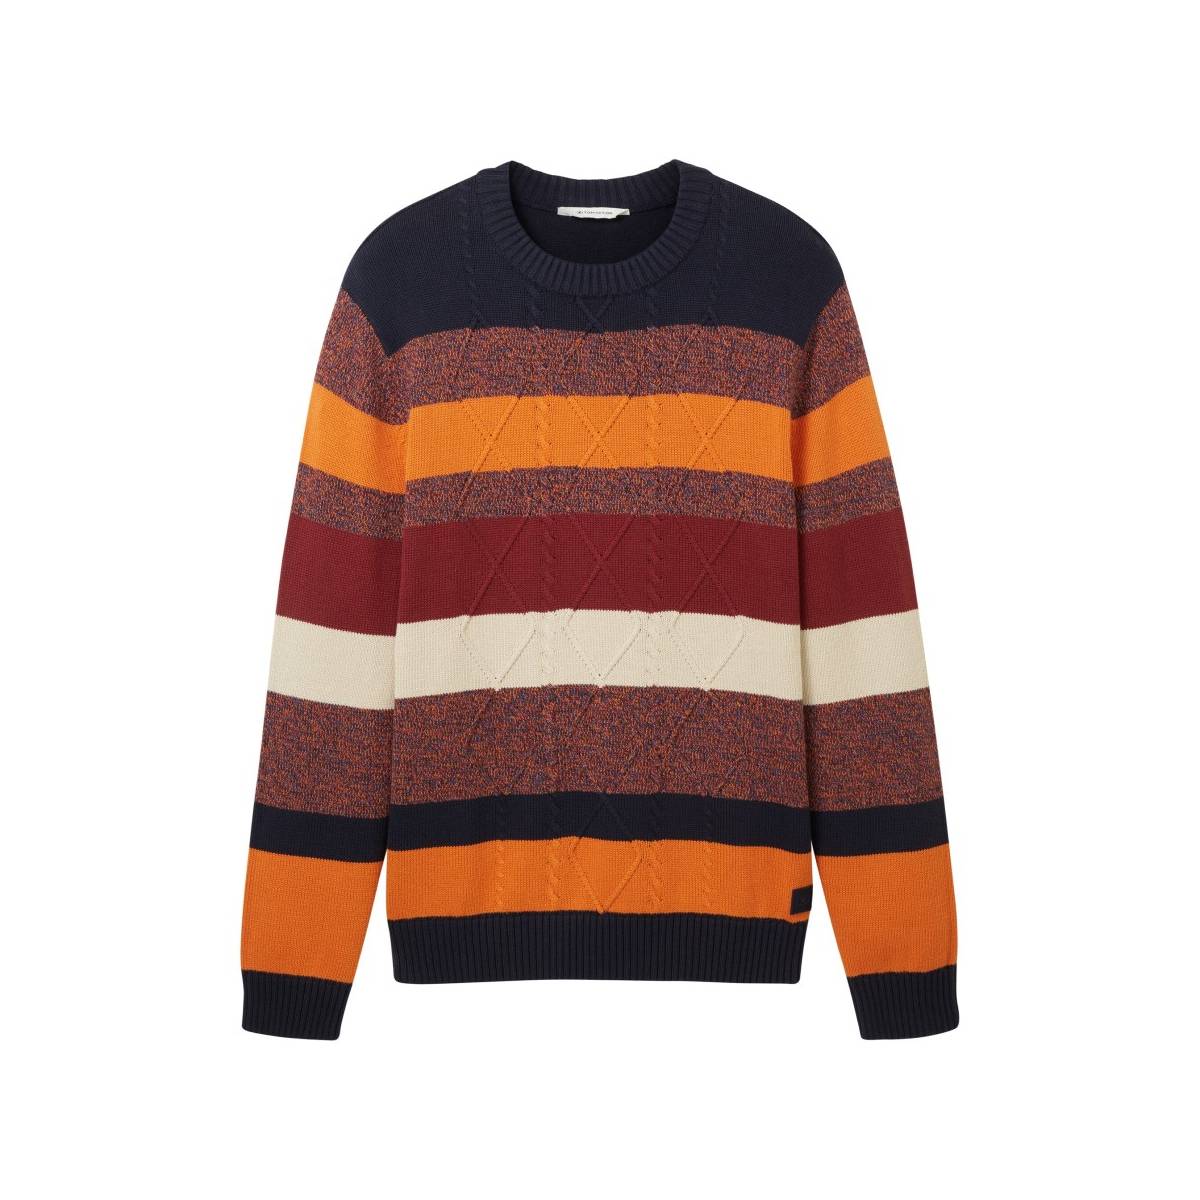 TOM TAILOR  tricot pull's en gilets multicolor -  model 1038245 - Herenkleding tricot pull's en gilets multicolor